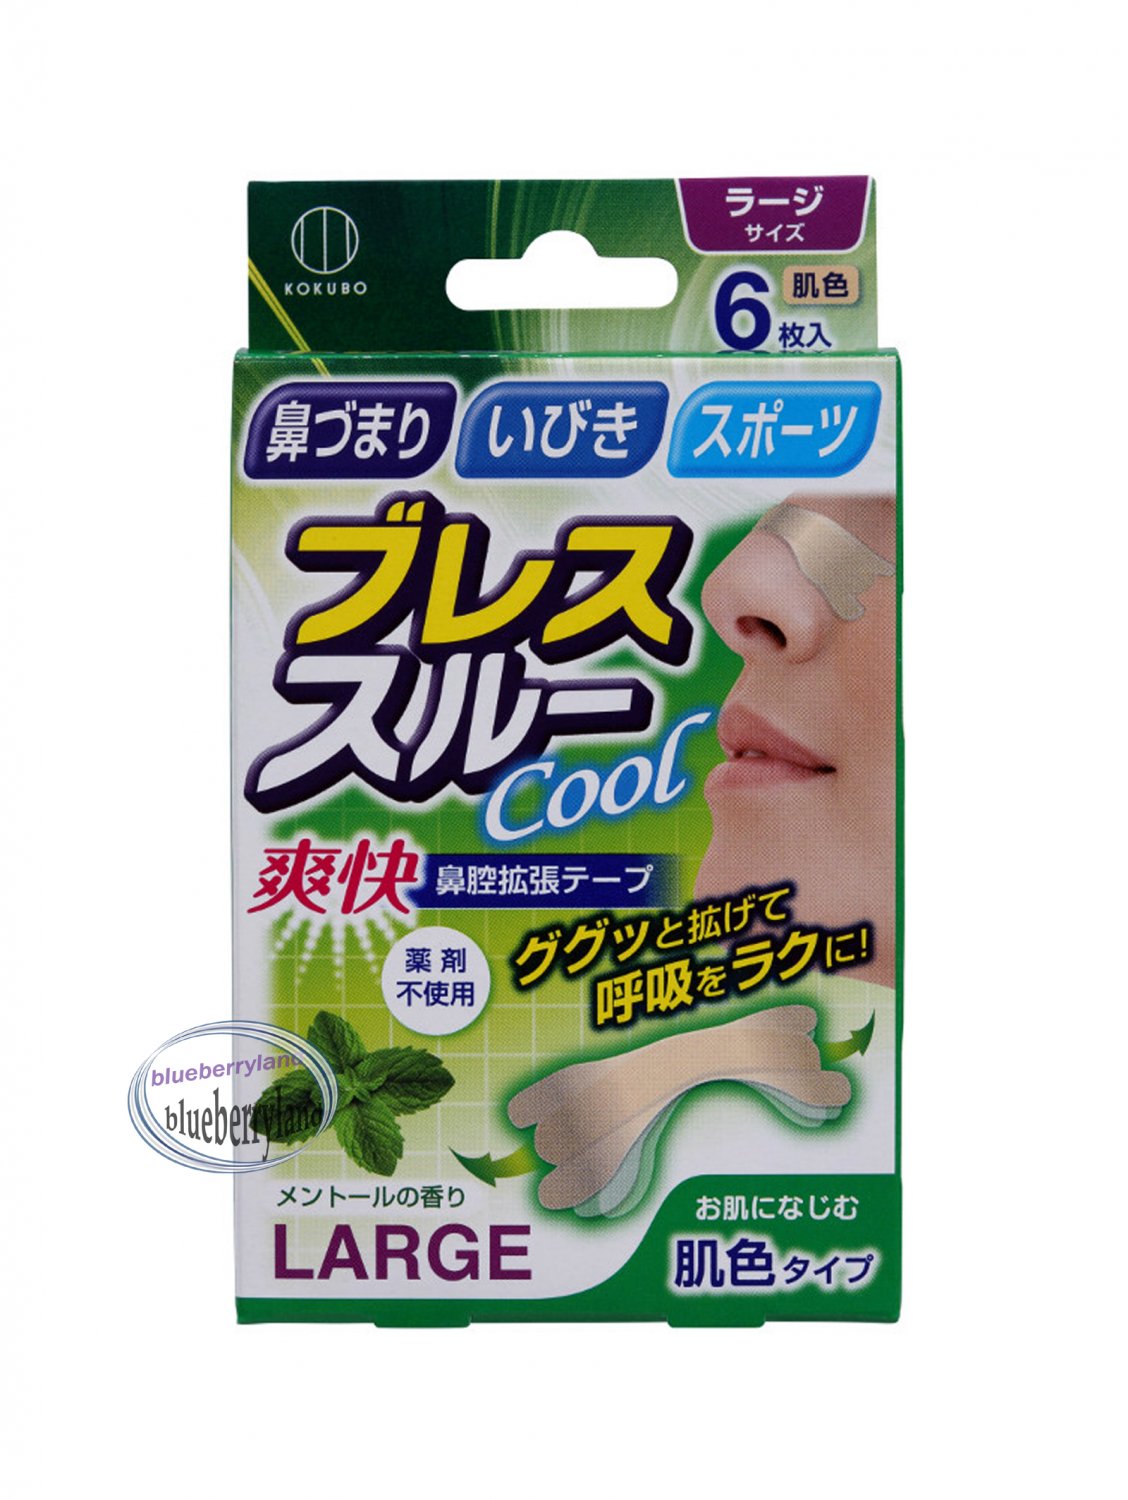 Japan Kokubo Breathe through Large Strips Mint 6 Pcs